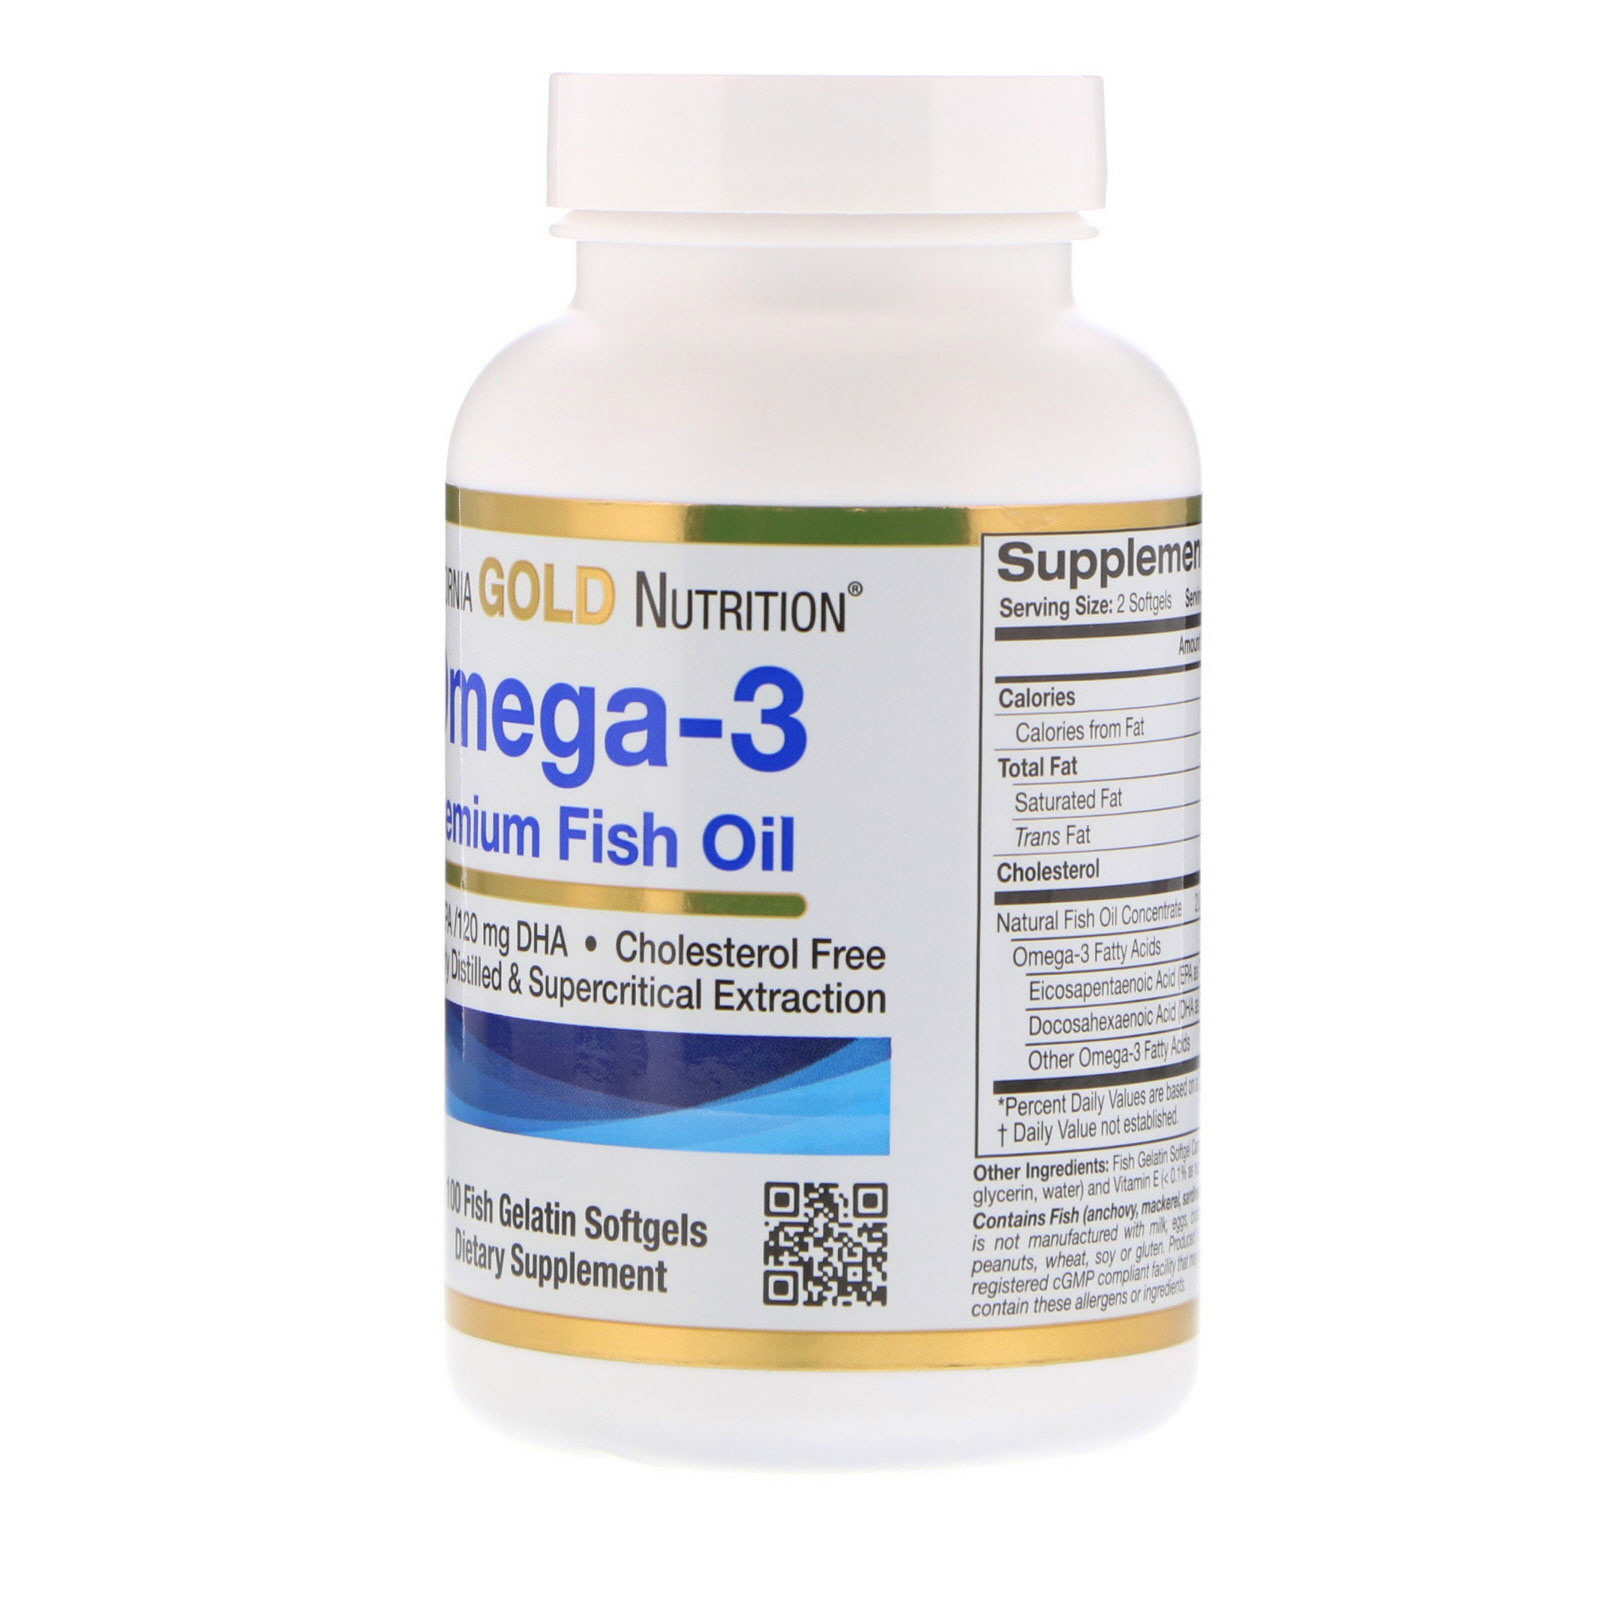 Омега-3 California Gold Nutrition Premium Fish Oil капсулы 100 шт.